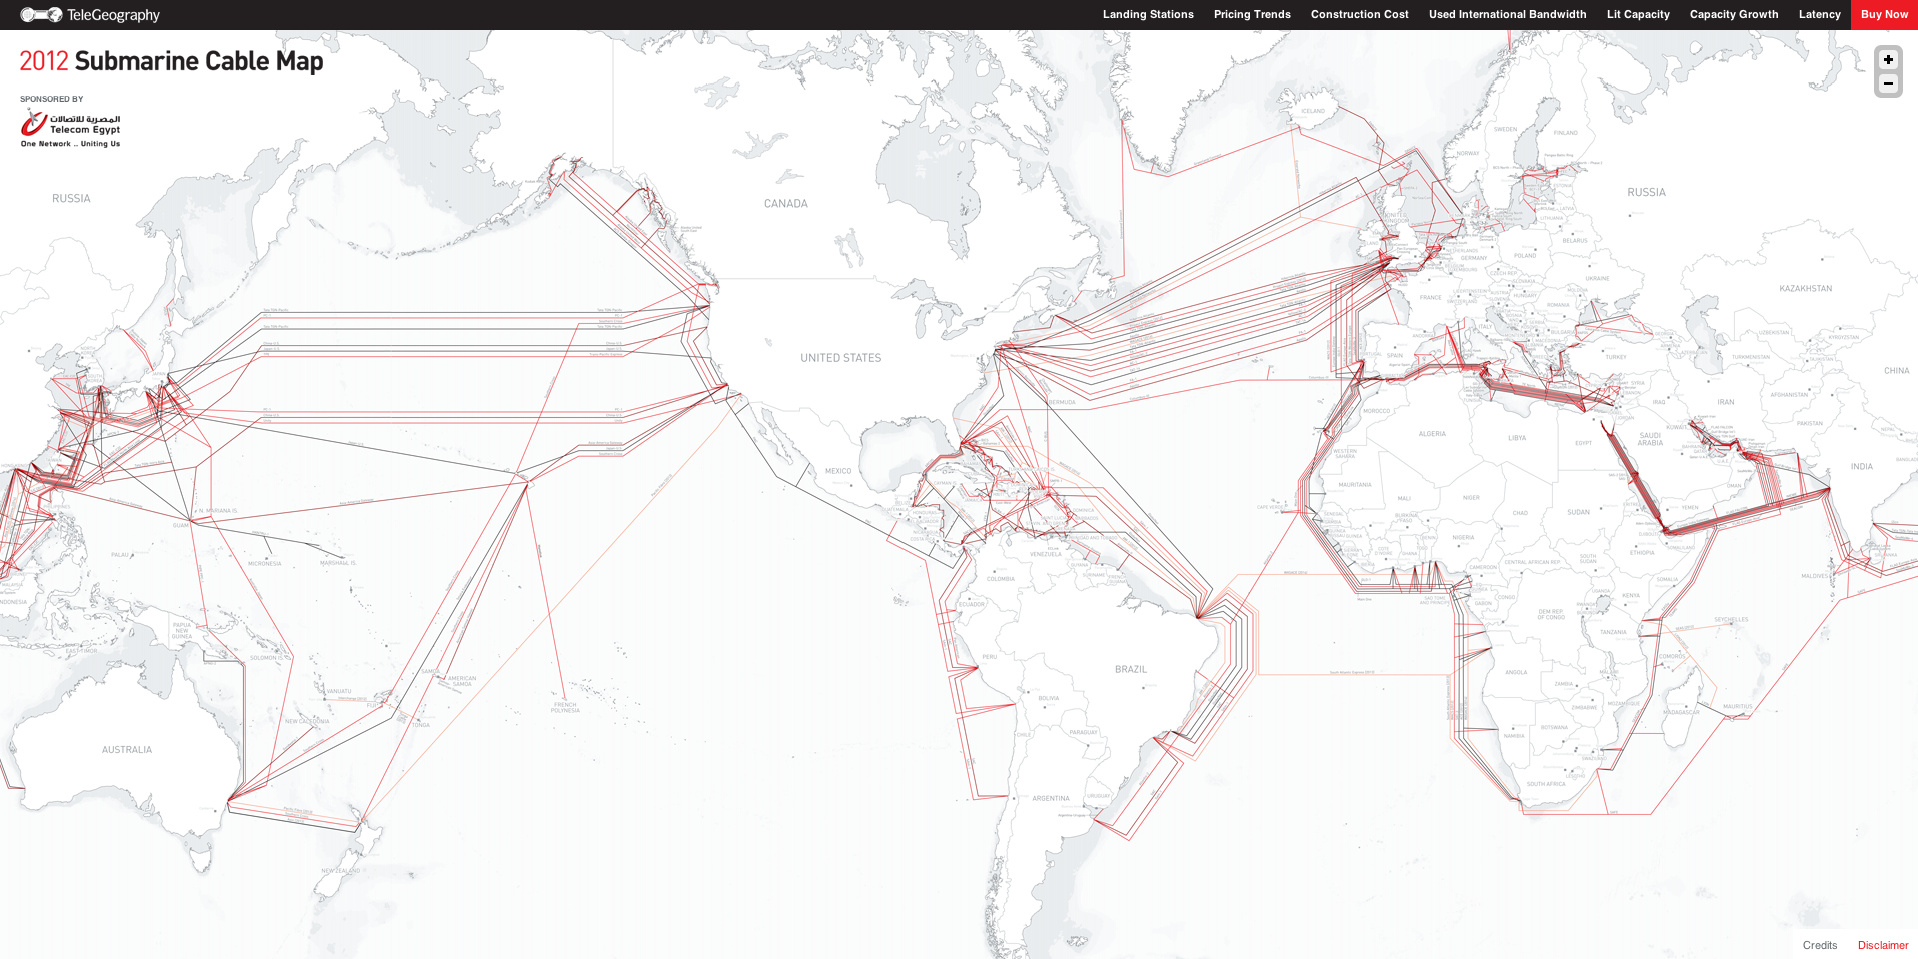 Interaktive Weltkarte aller Internet-Unterseekabel